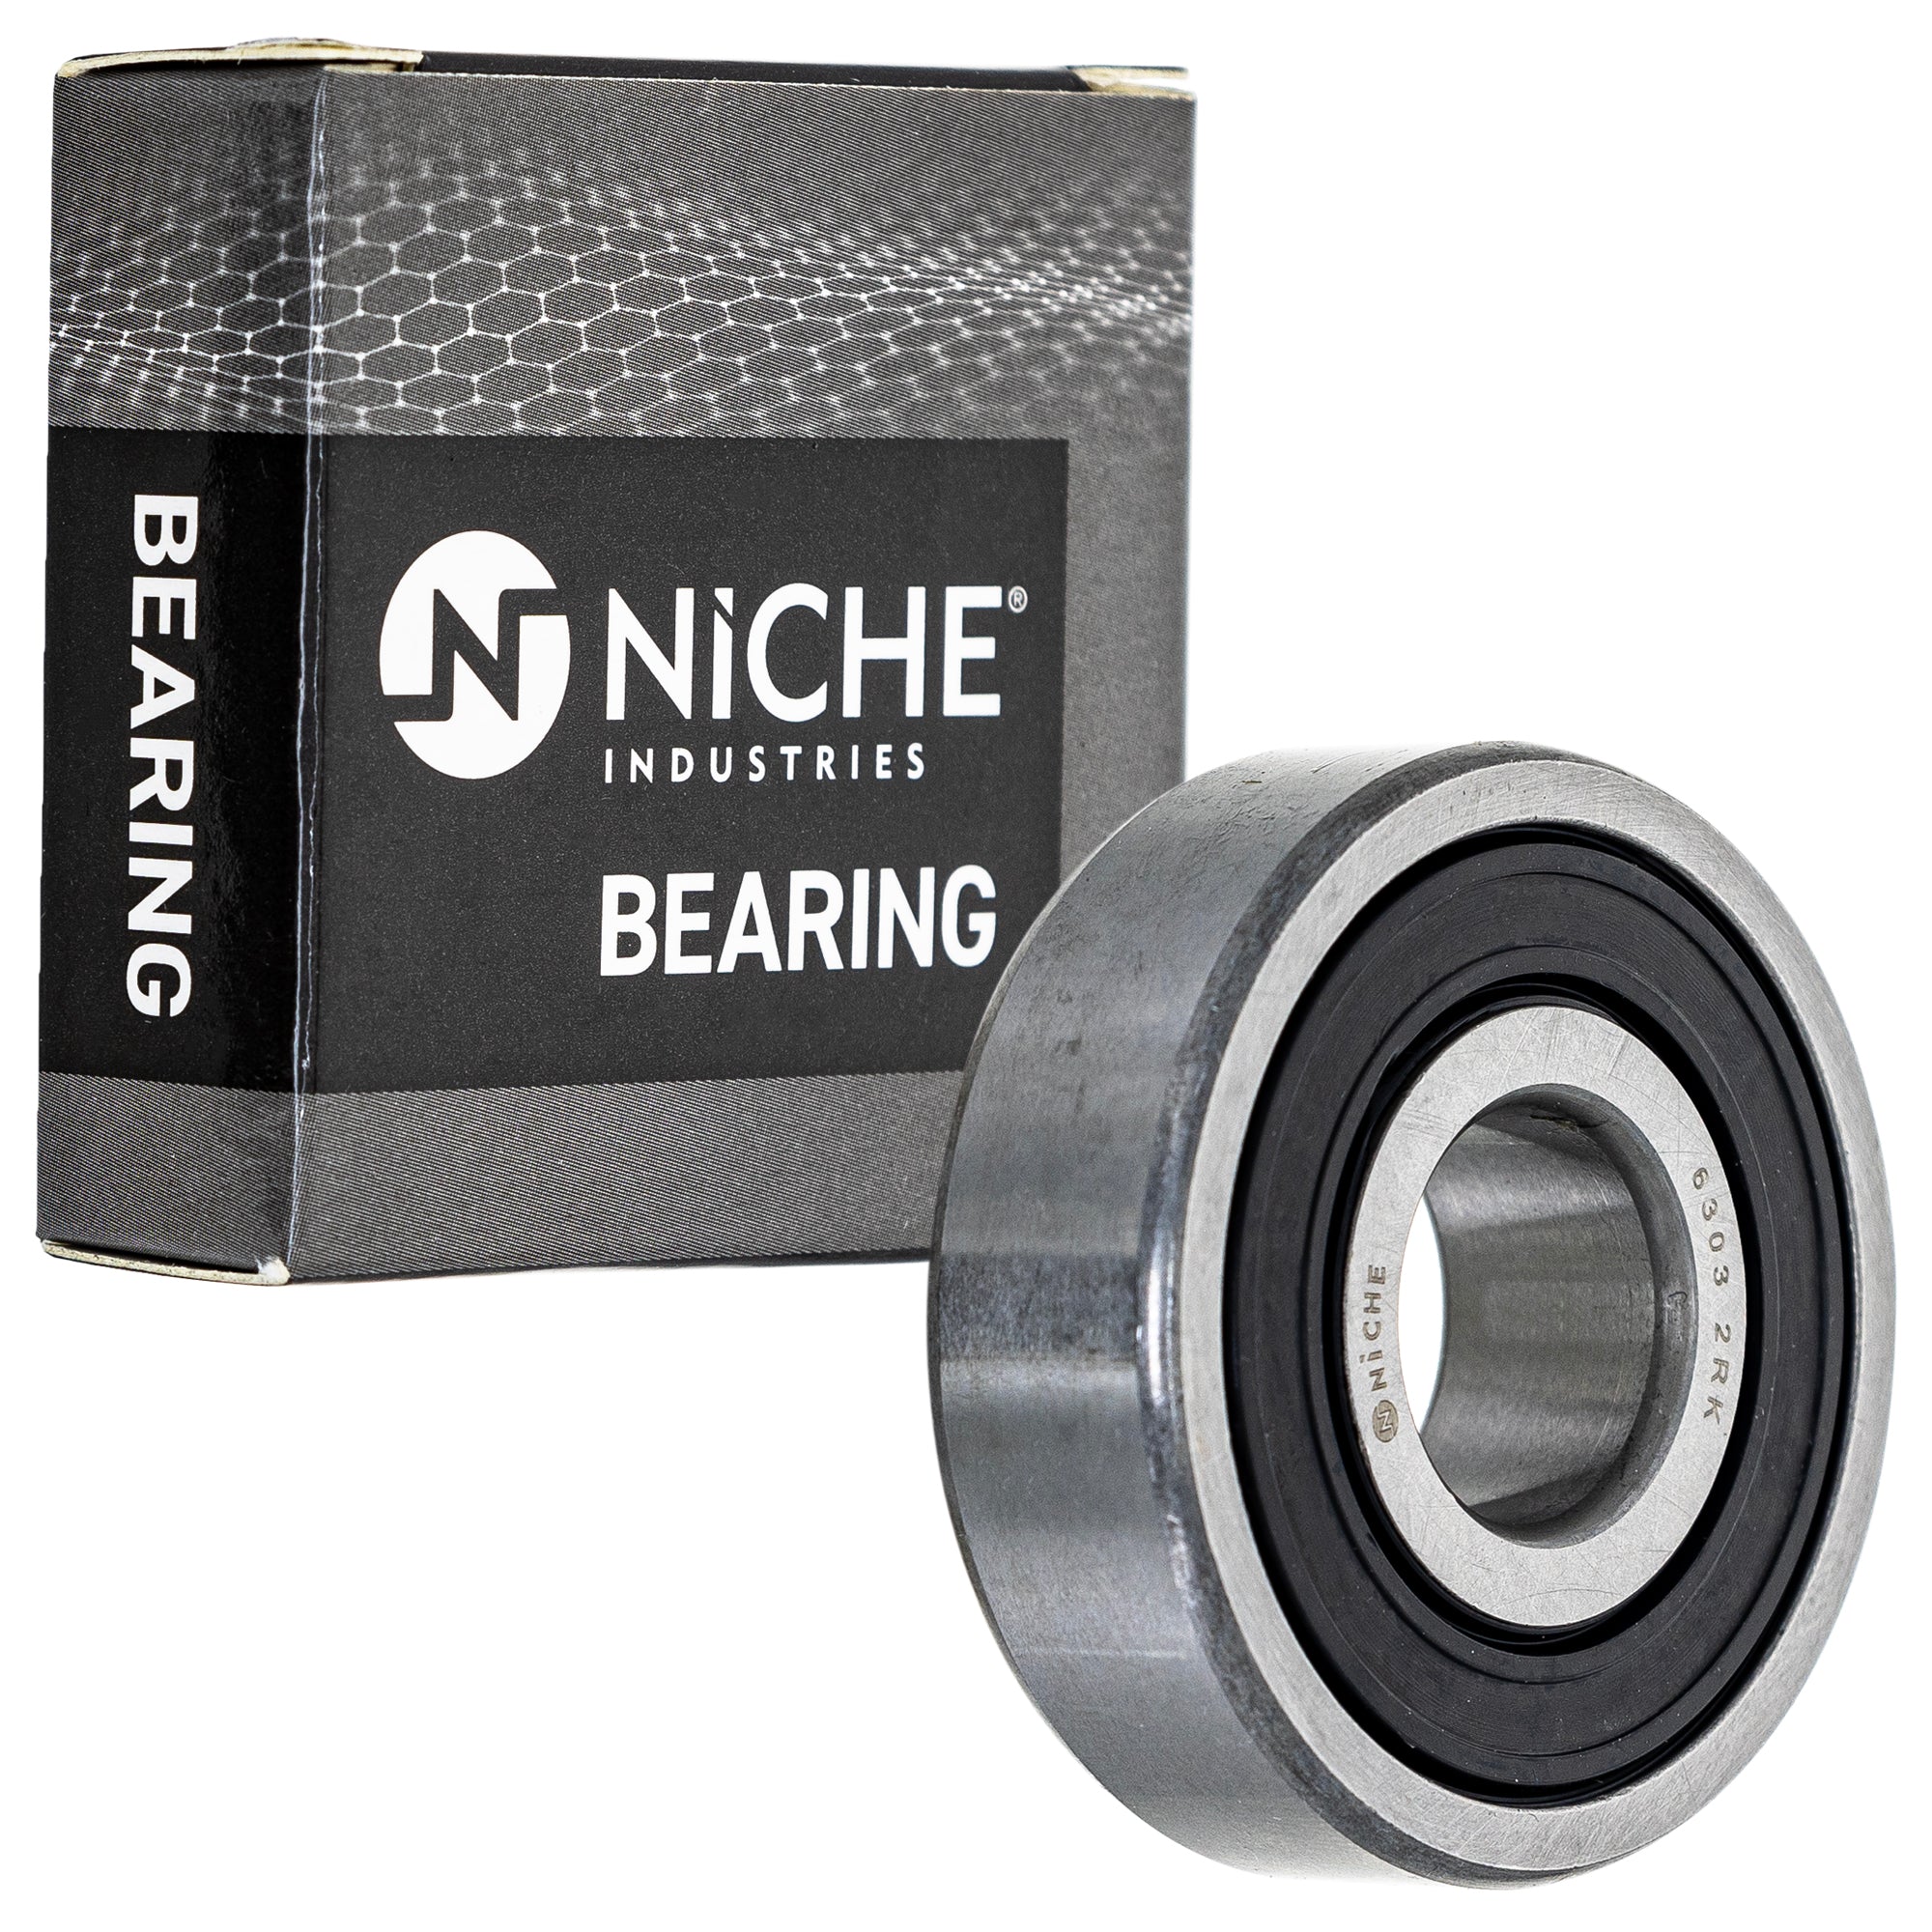 NICHE 519-CBB2328R Bearing 2-Pack for zOTHER YZ85 YZ80 YZ125 XT600